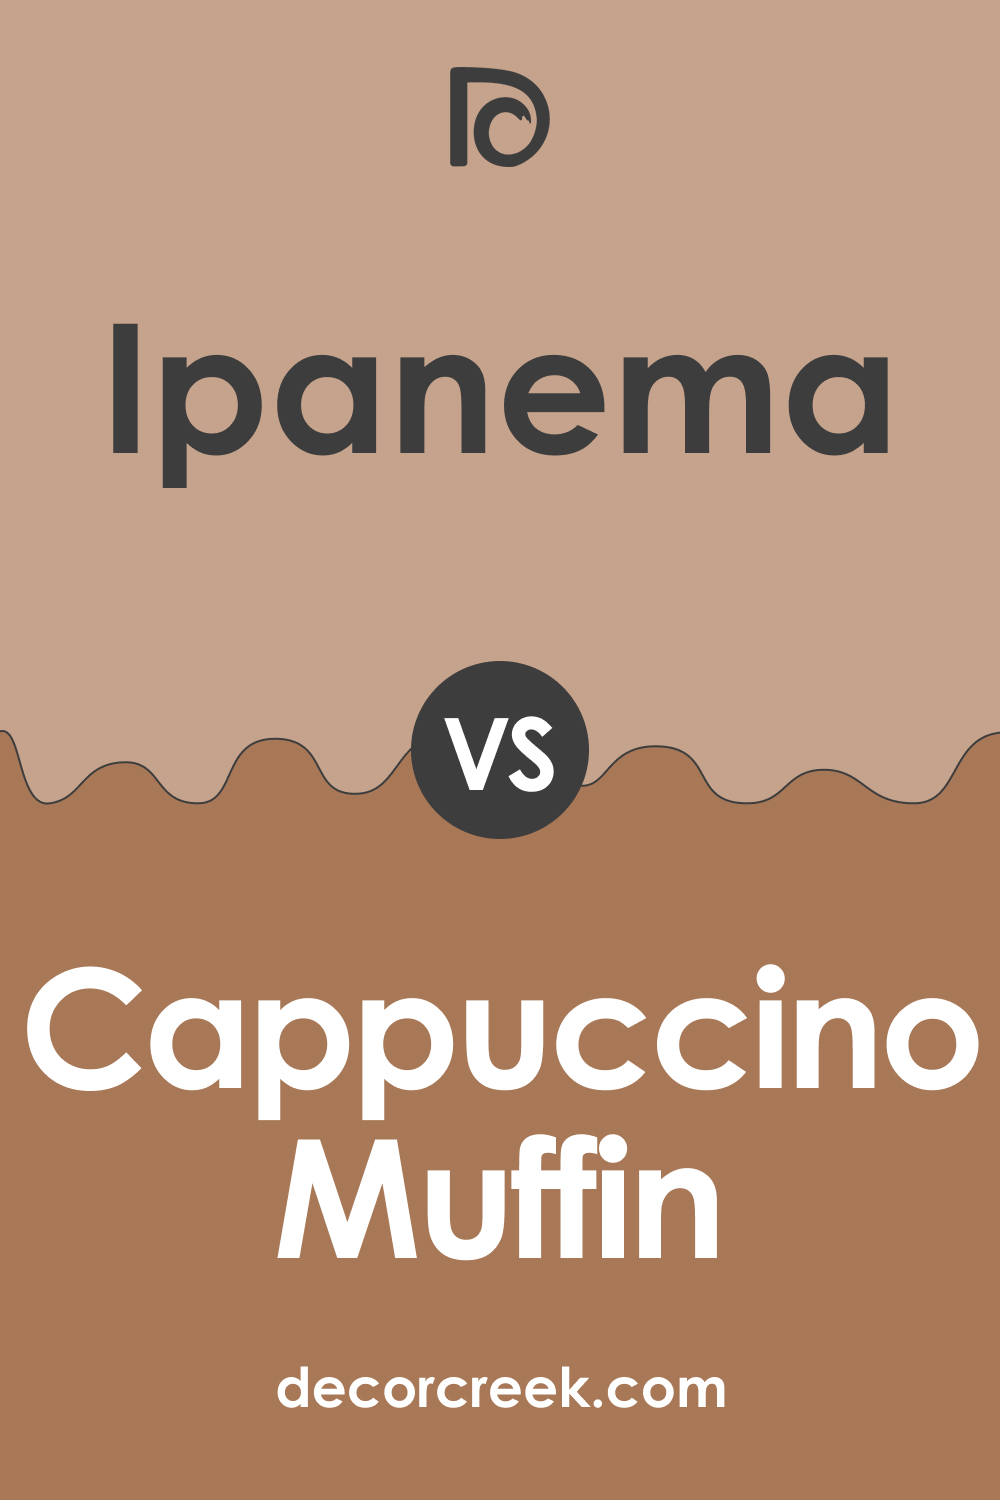 Ipanema AF-245 vs. BM 1155 Cappuccino Muffin